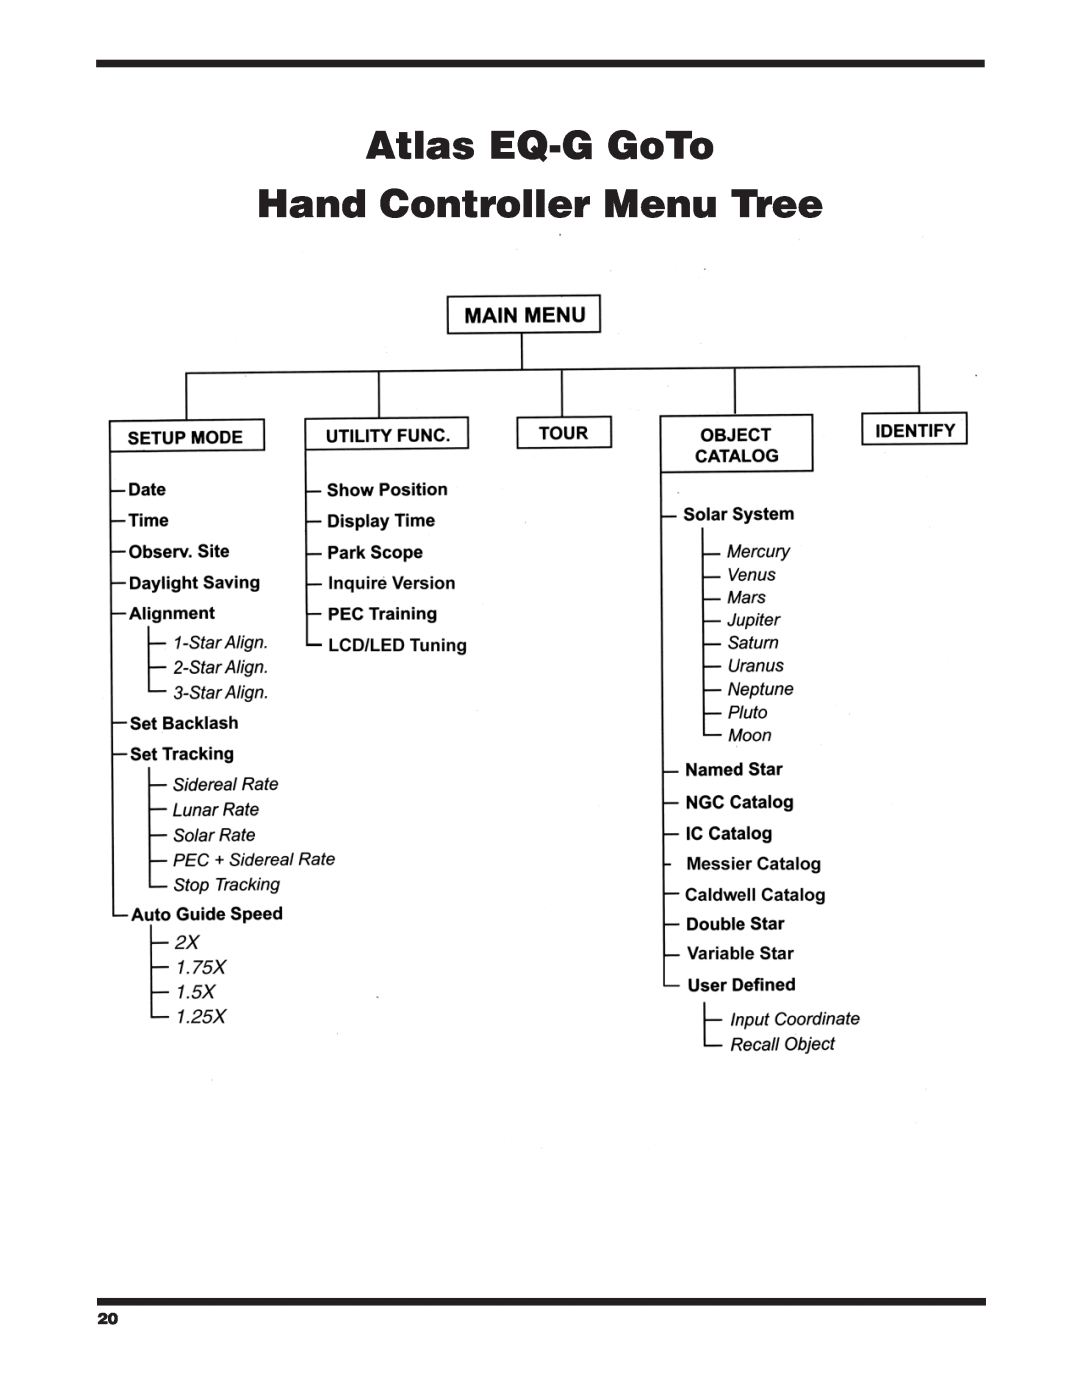 Orion instruction manual Atlas EQ-G GoTo Hand Controller Menu Tree 